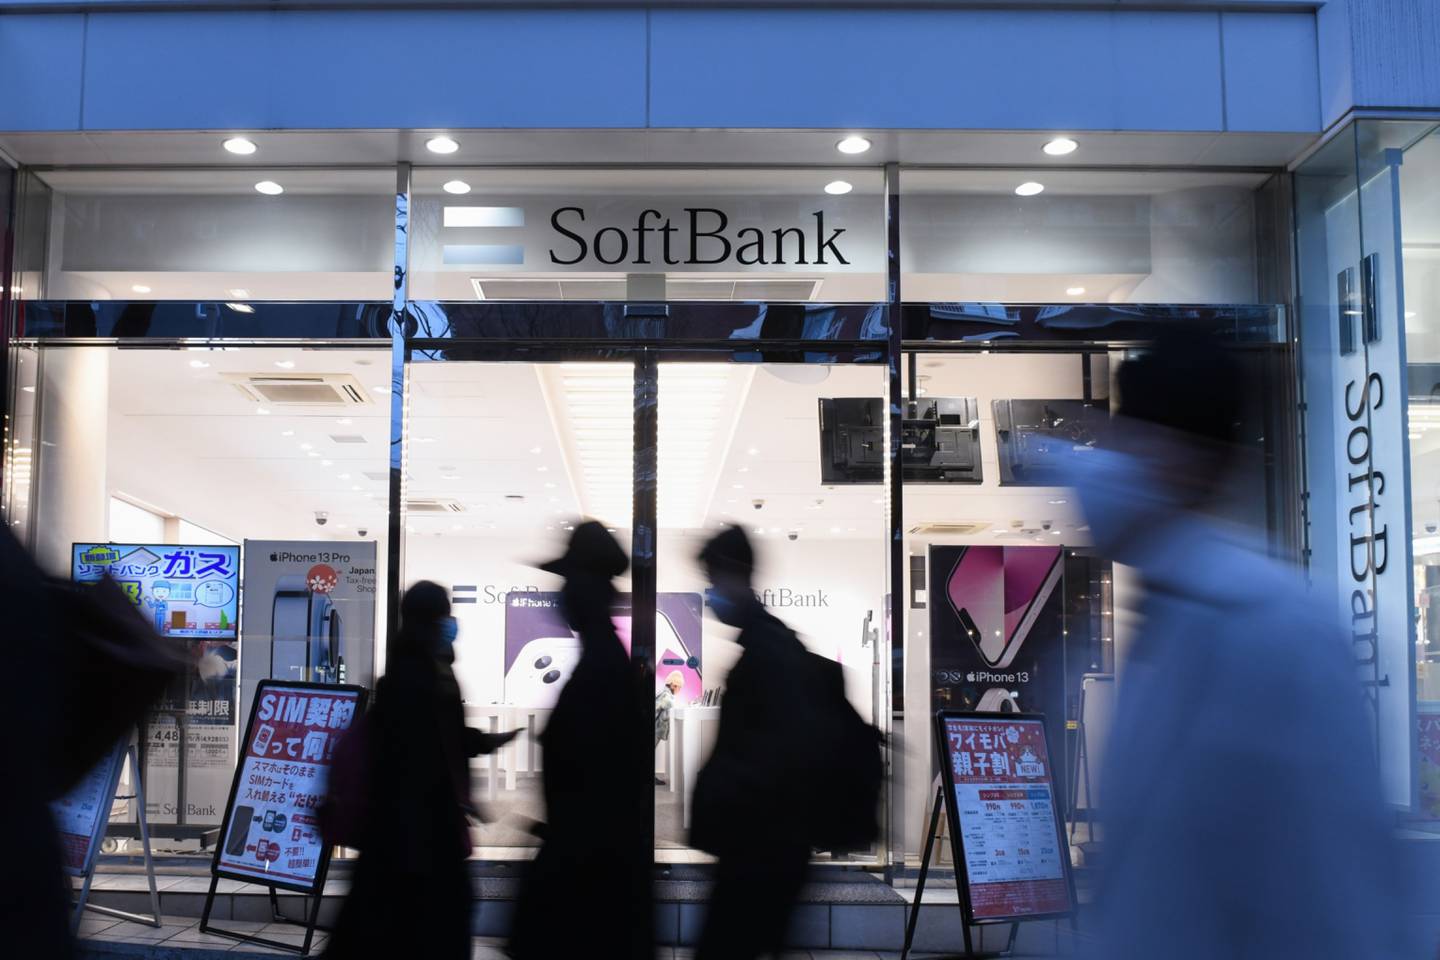 El logo de SoftBank